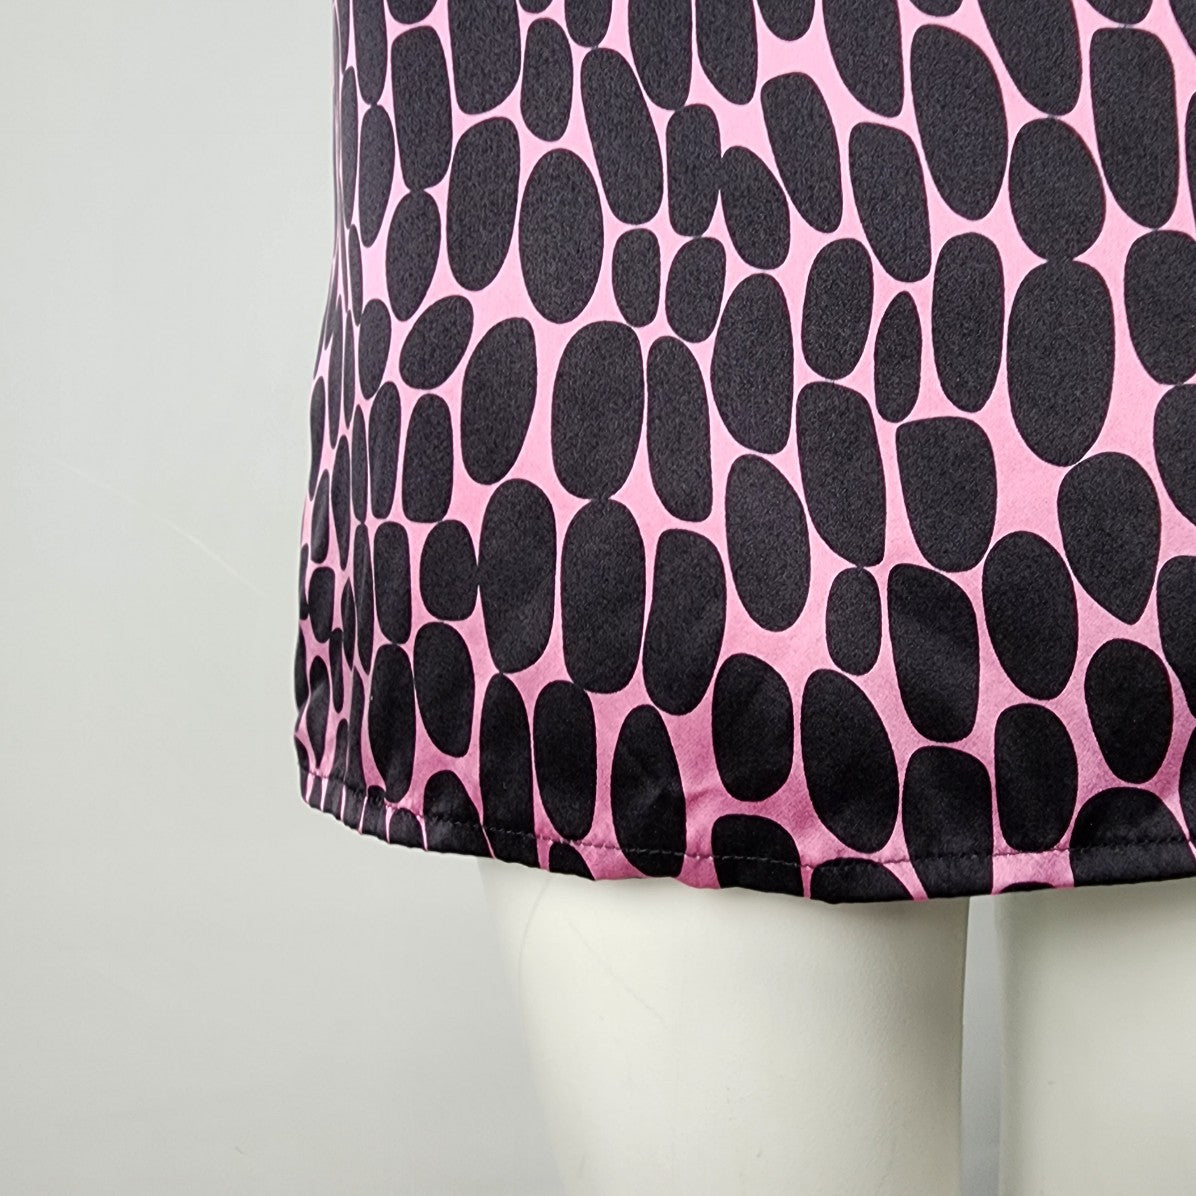 Citrine Collection Pink & Black Silk Sleeveless Mini Sheath Dress Size 4